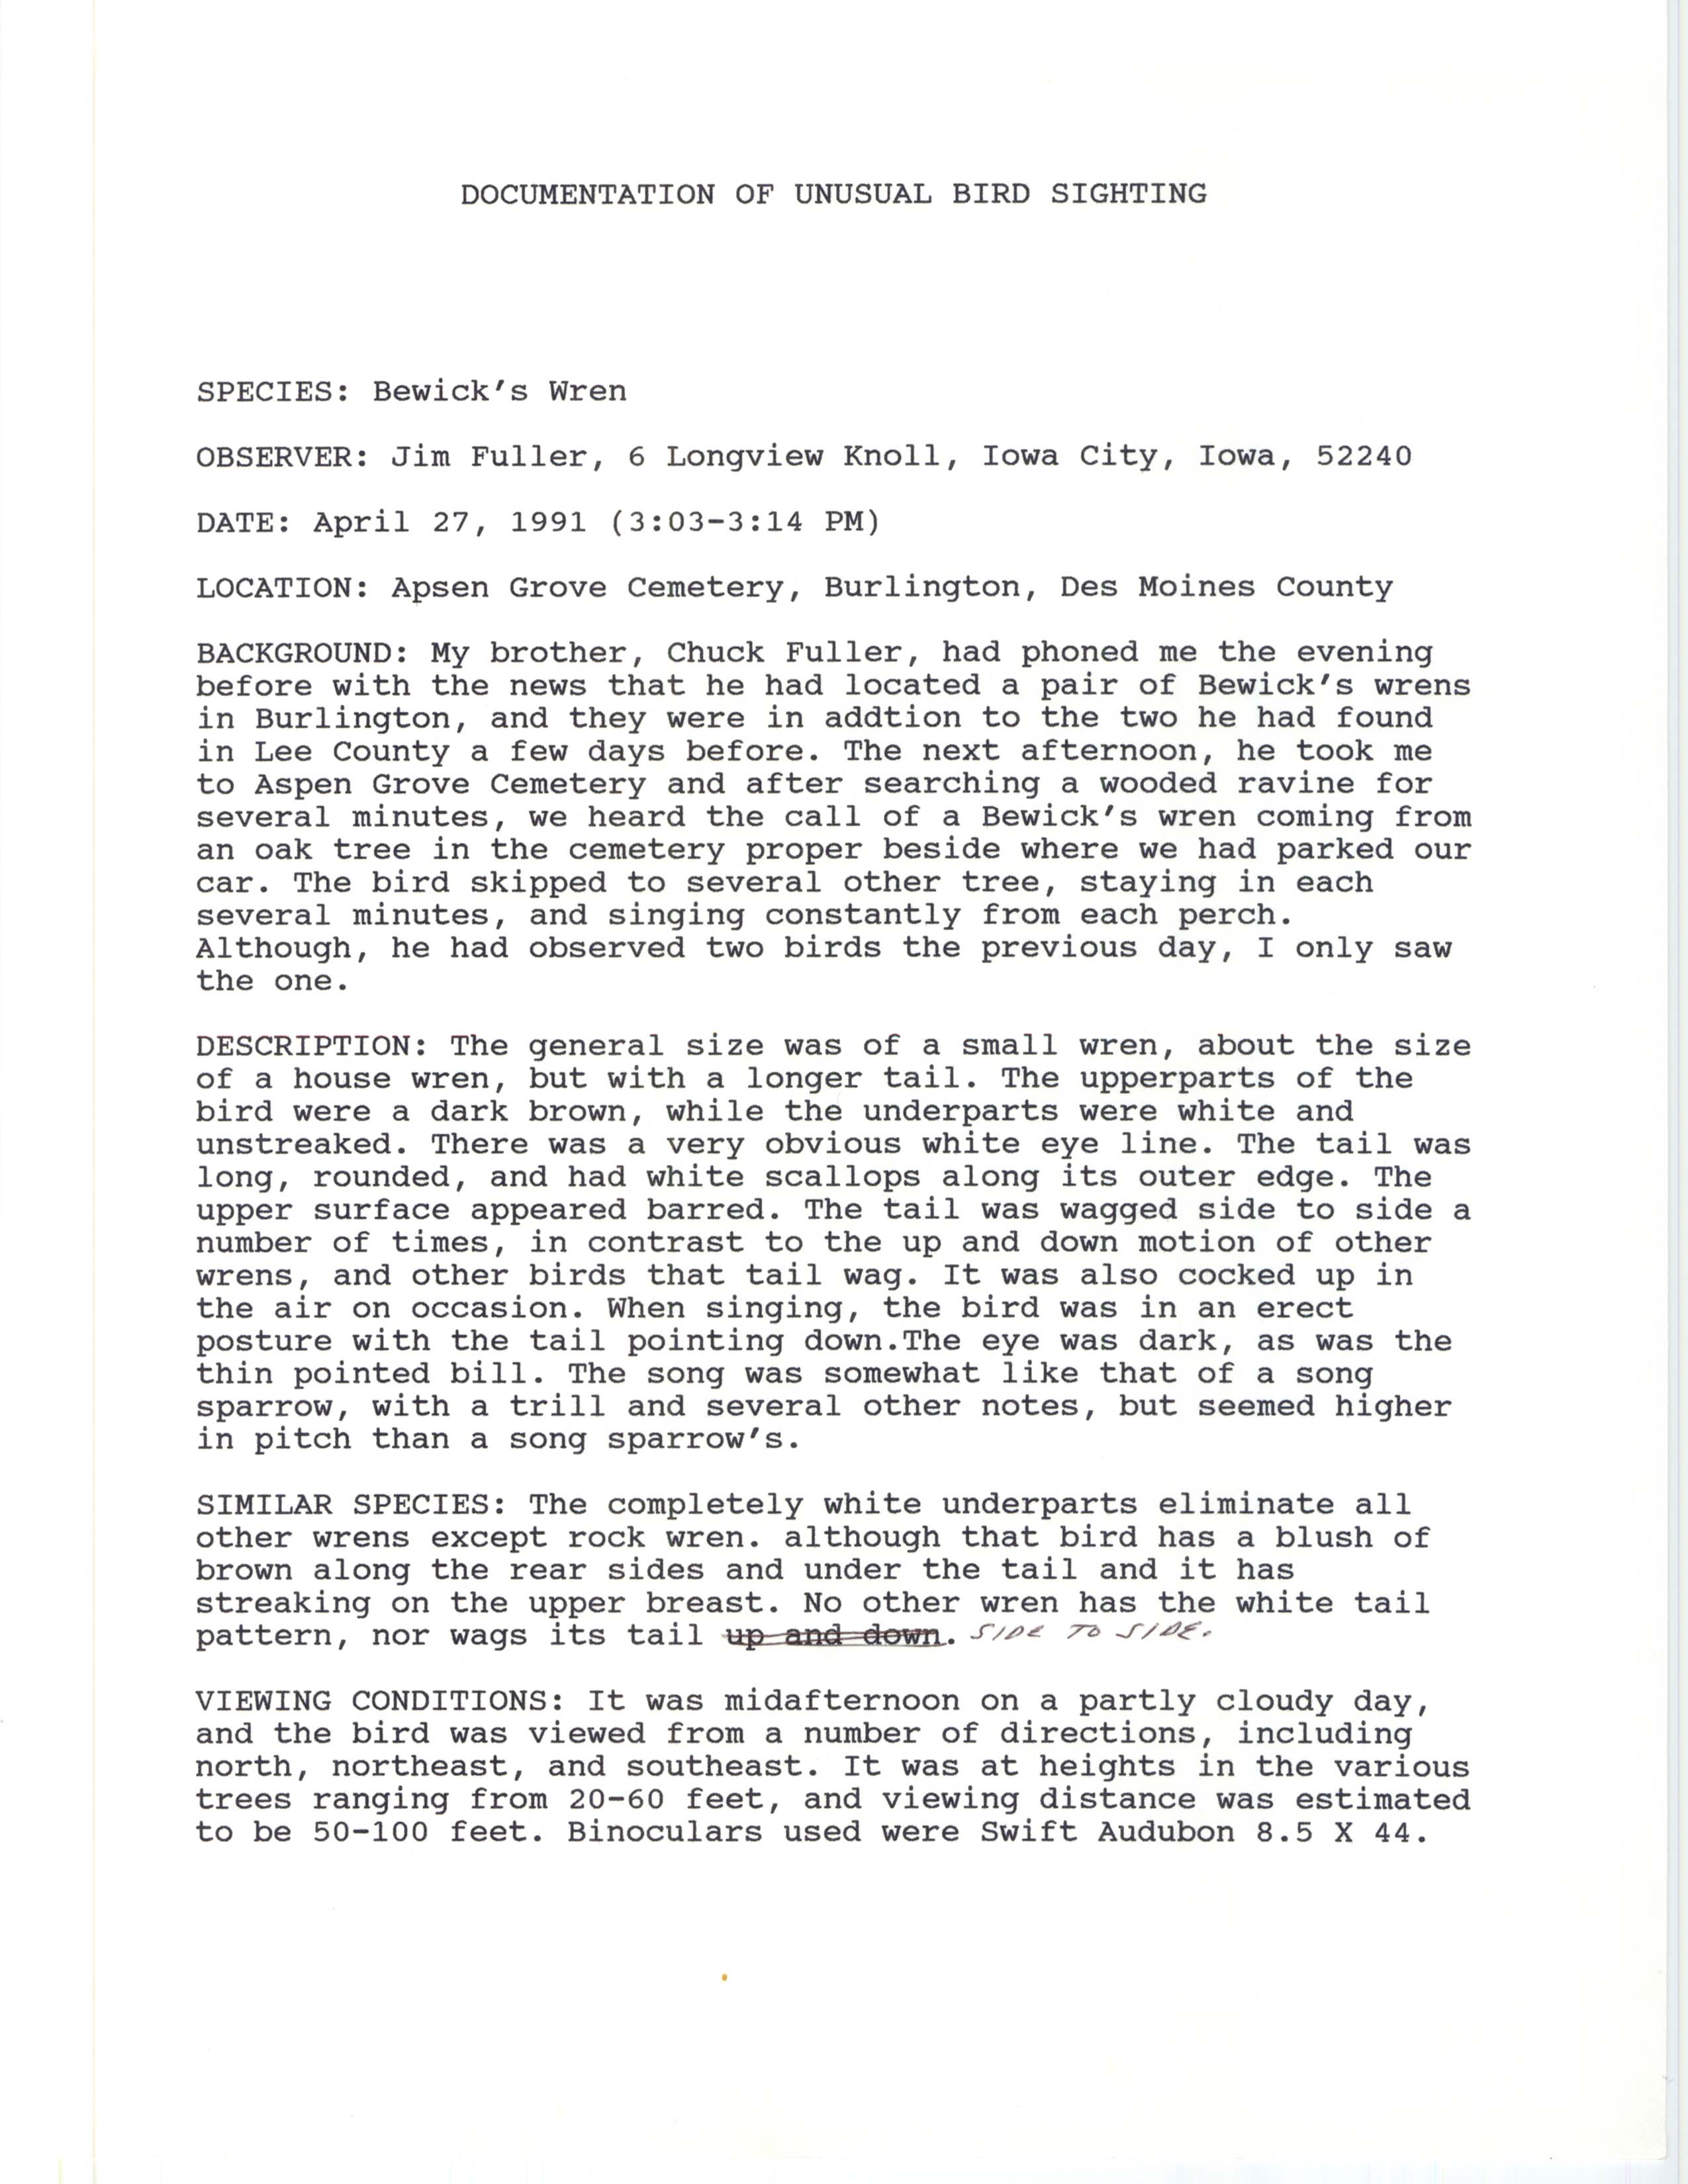 Rare bird documentation form for Bewick's Wren at Aspen Grove Cemetery in Burlington, 1991